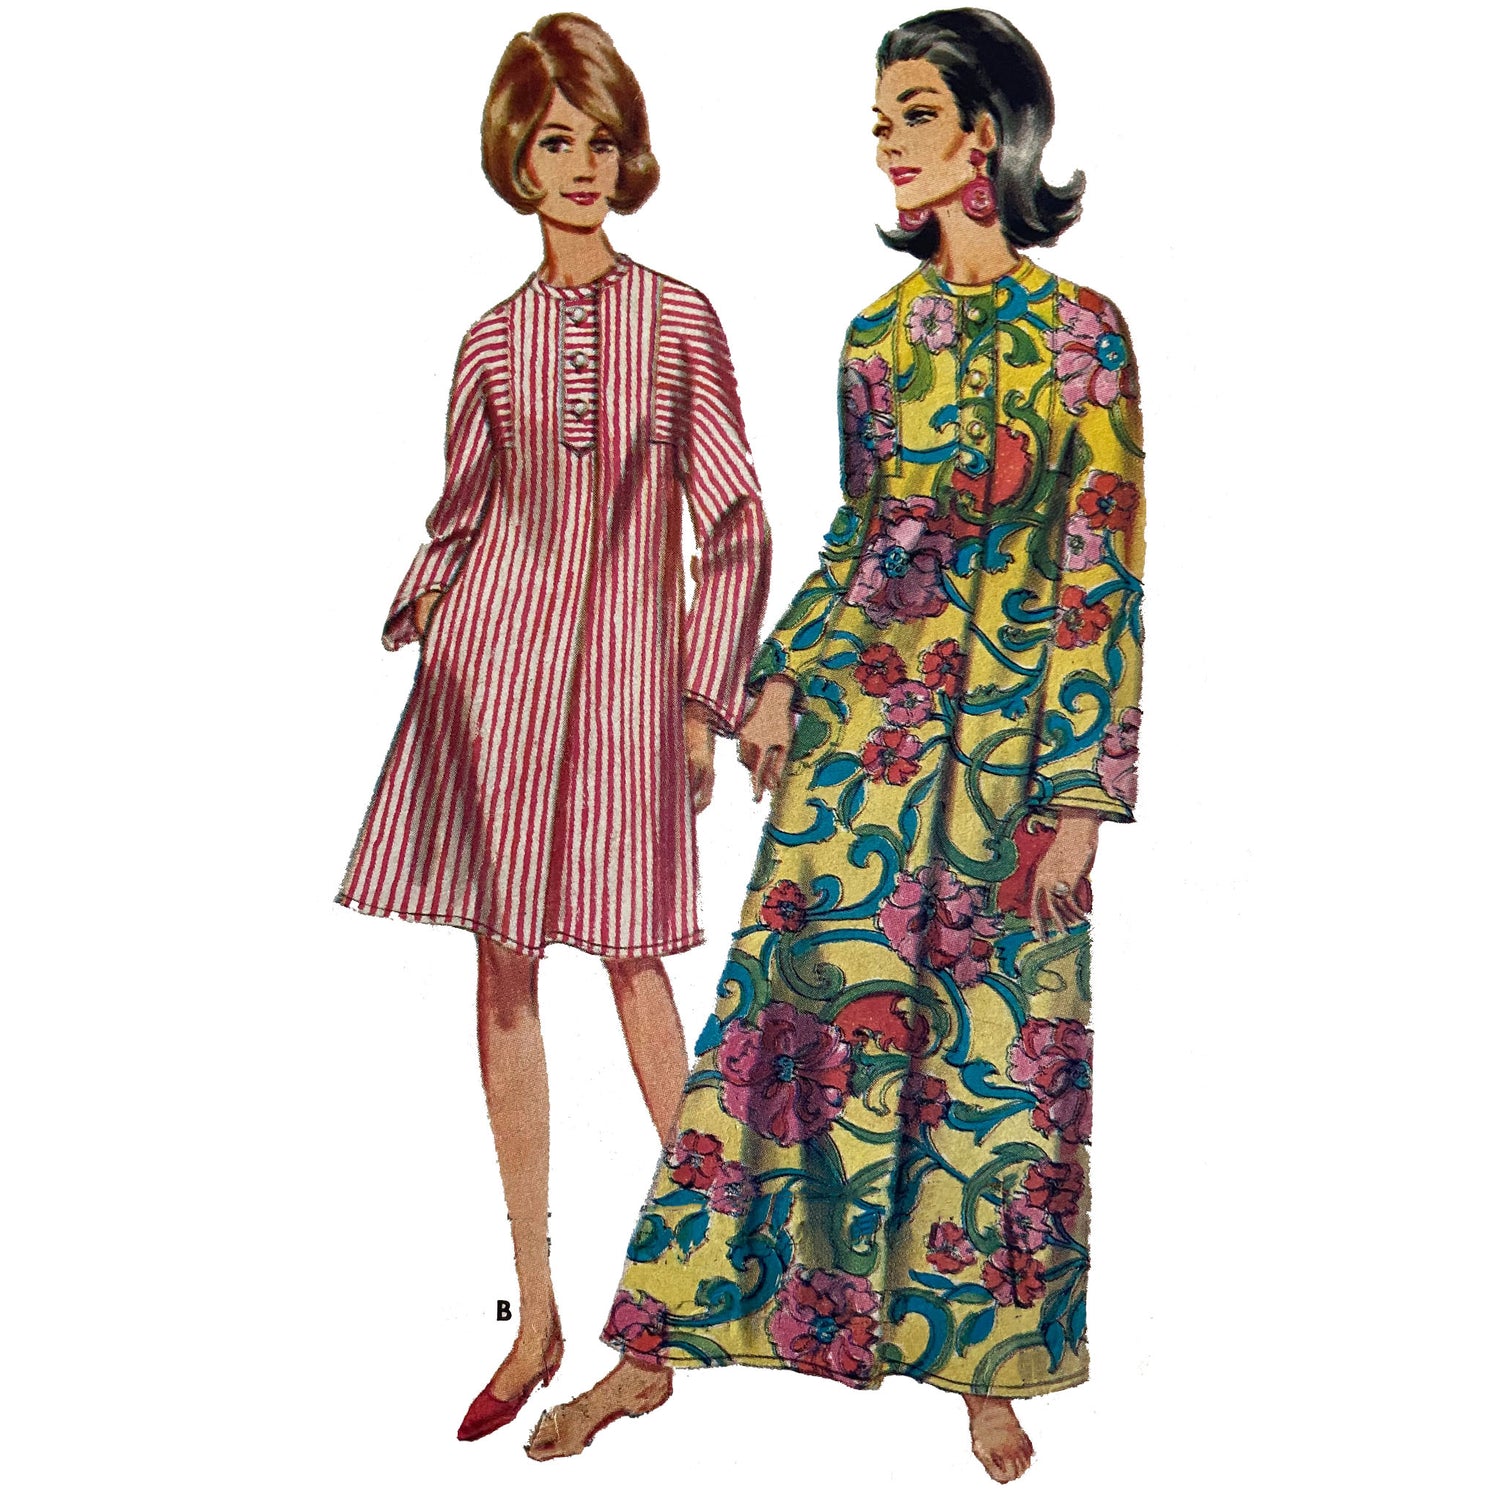 Model wearing dress or caftan made from Butterick 4238 pattern